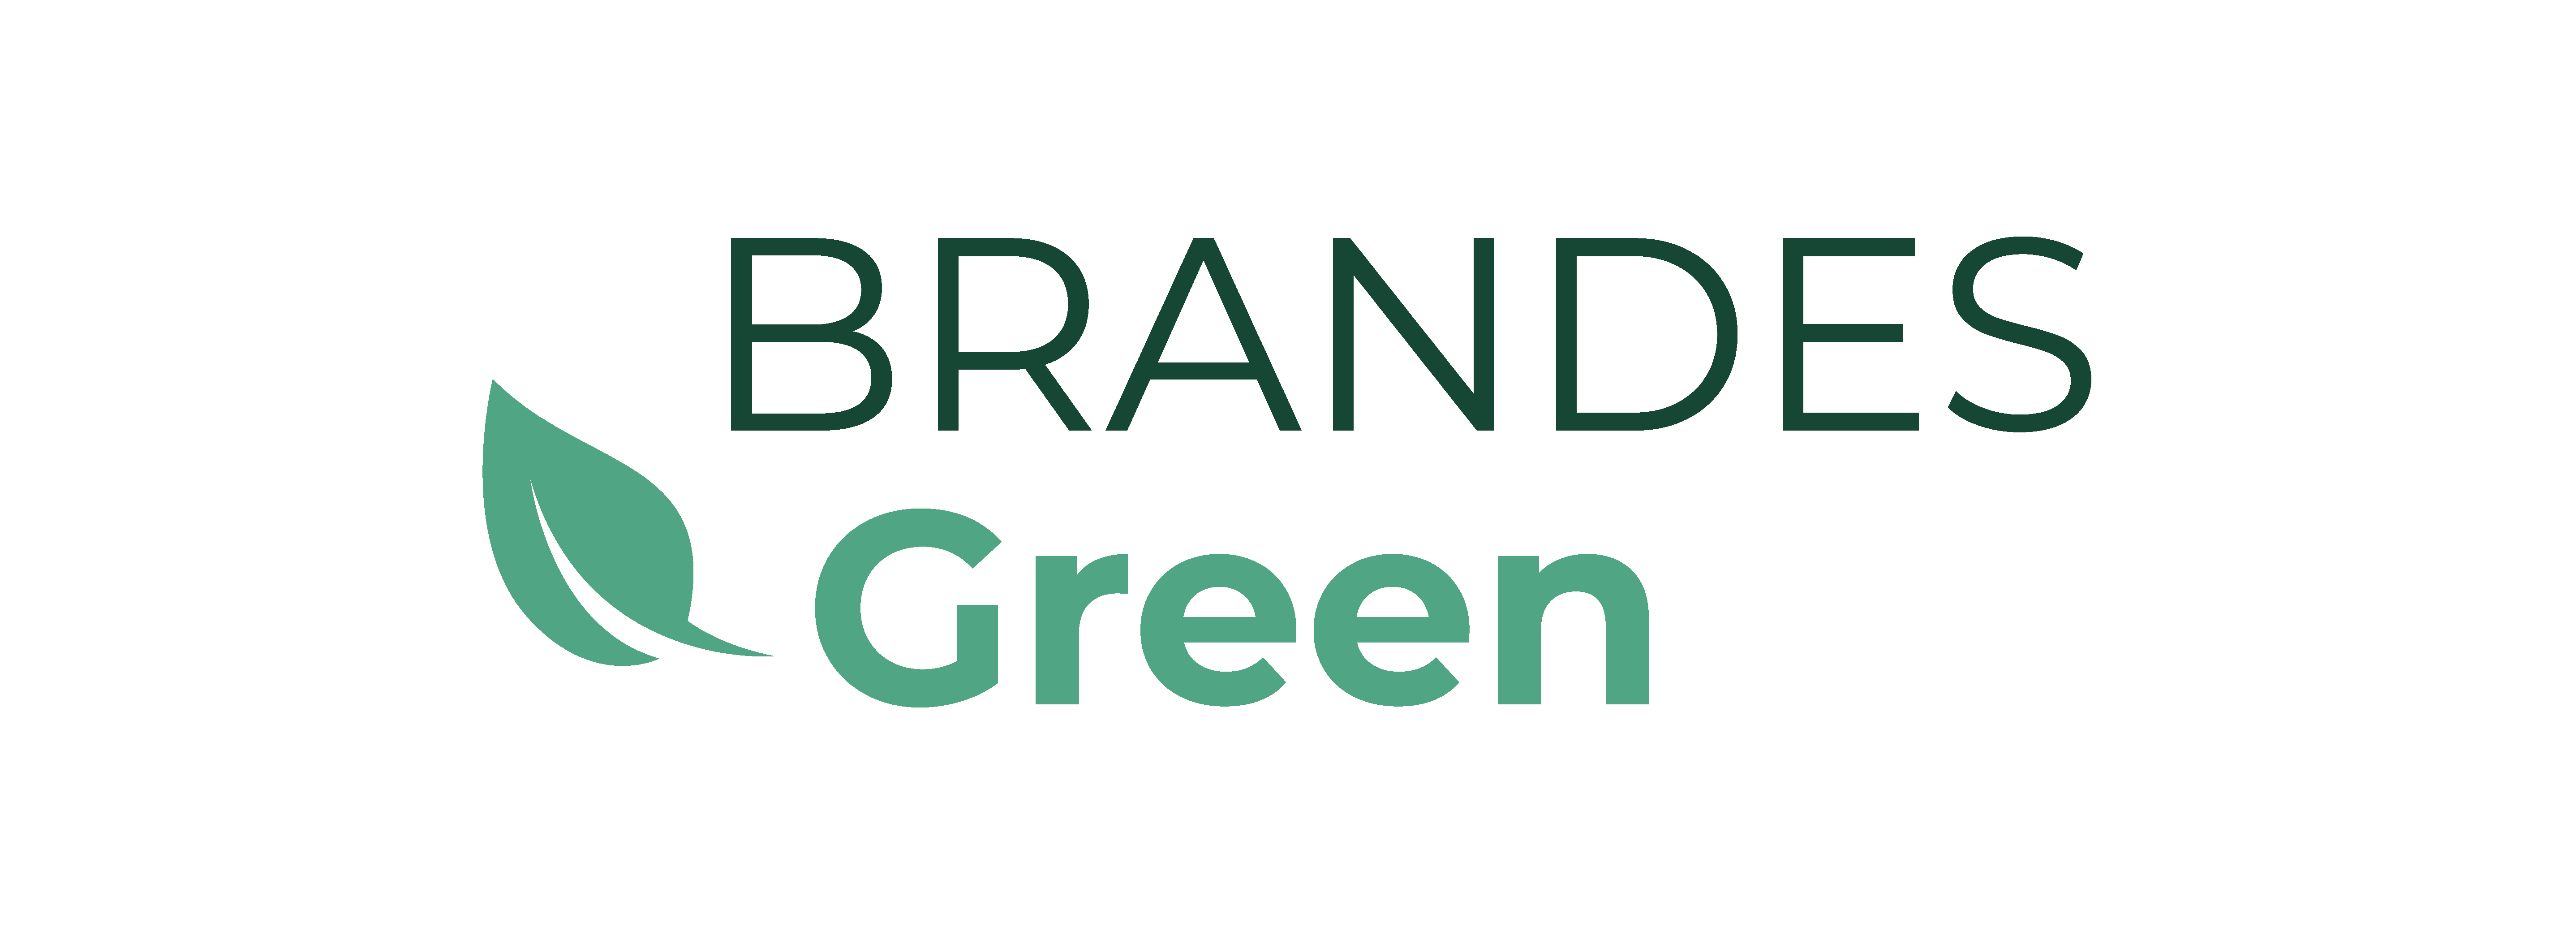 Brandes Green